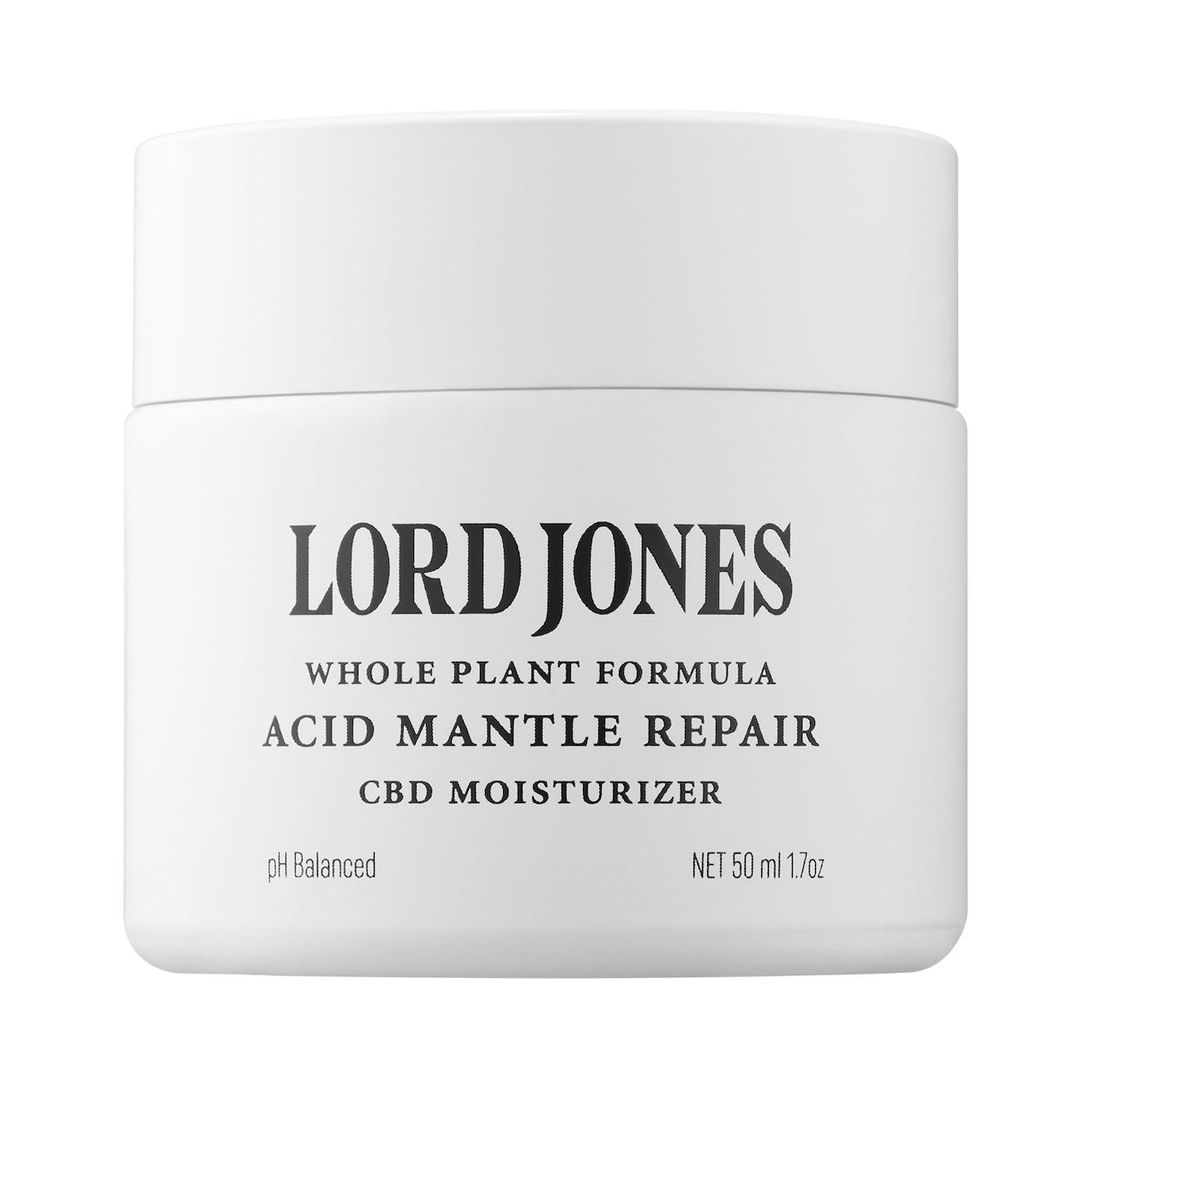 lord jones acid mantle repair moisturizer with 250mg cbd and ceramides